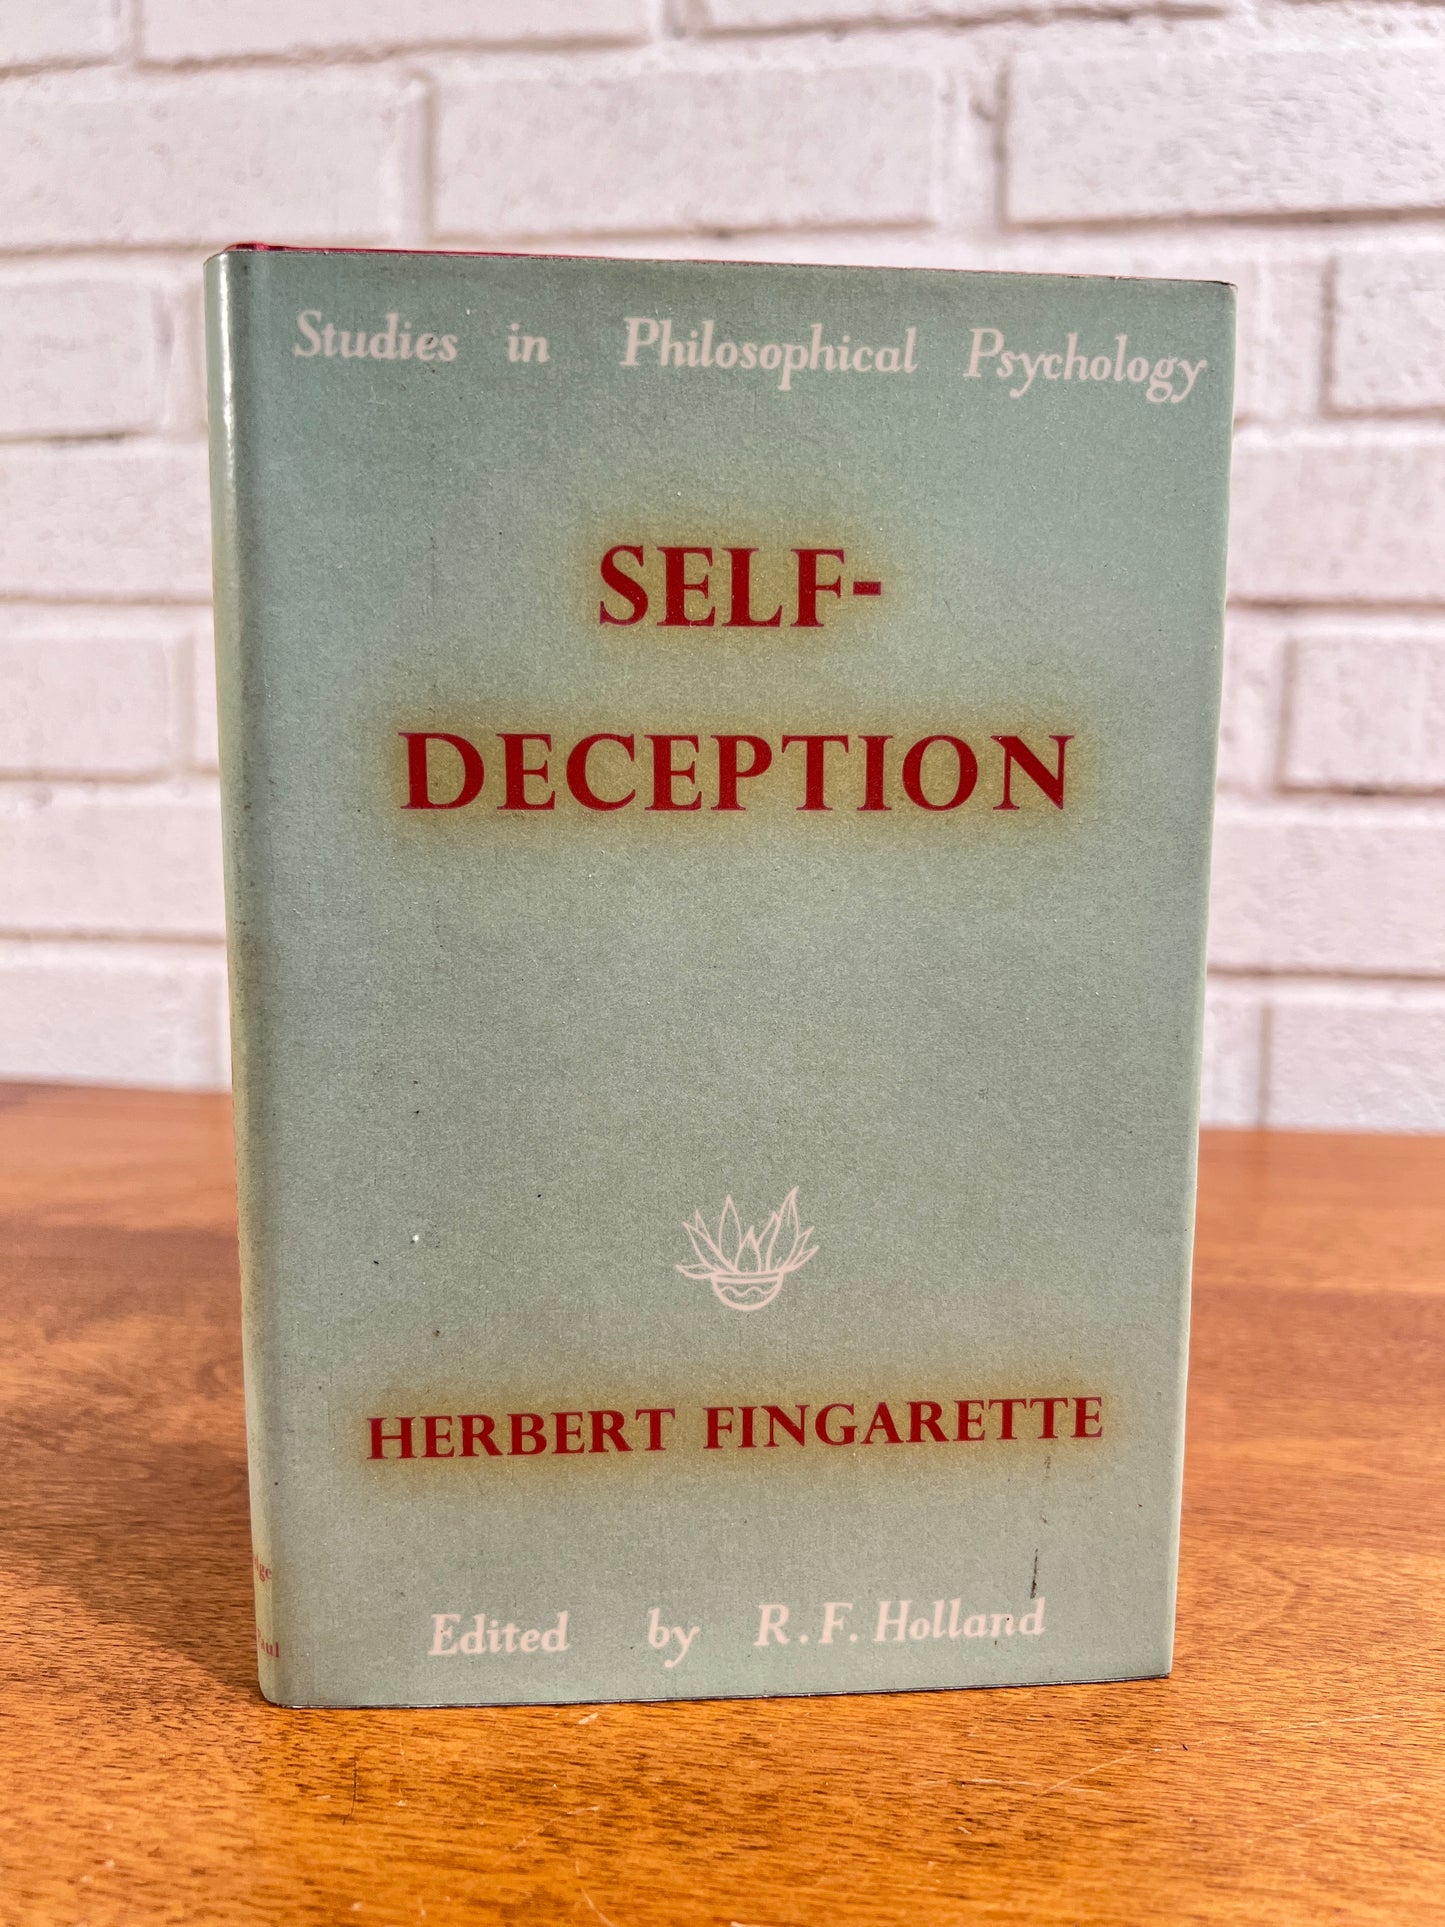 Self Deception: Studies in Philosophical Psychology by Herbert Fingarette